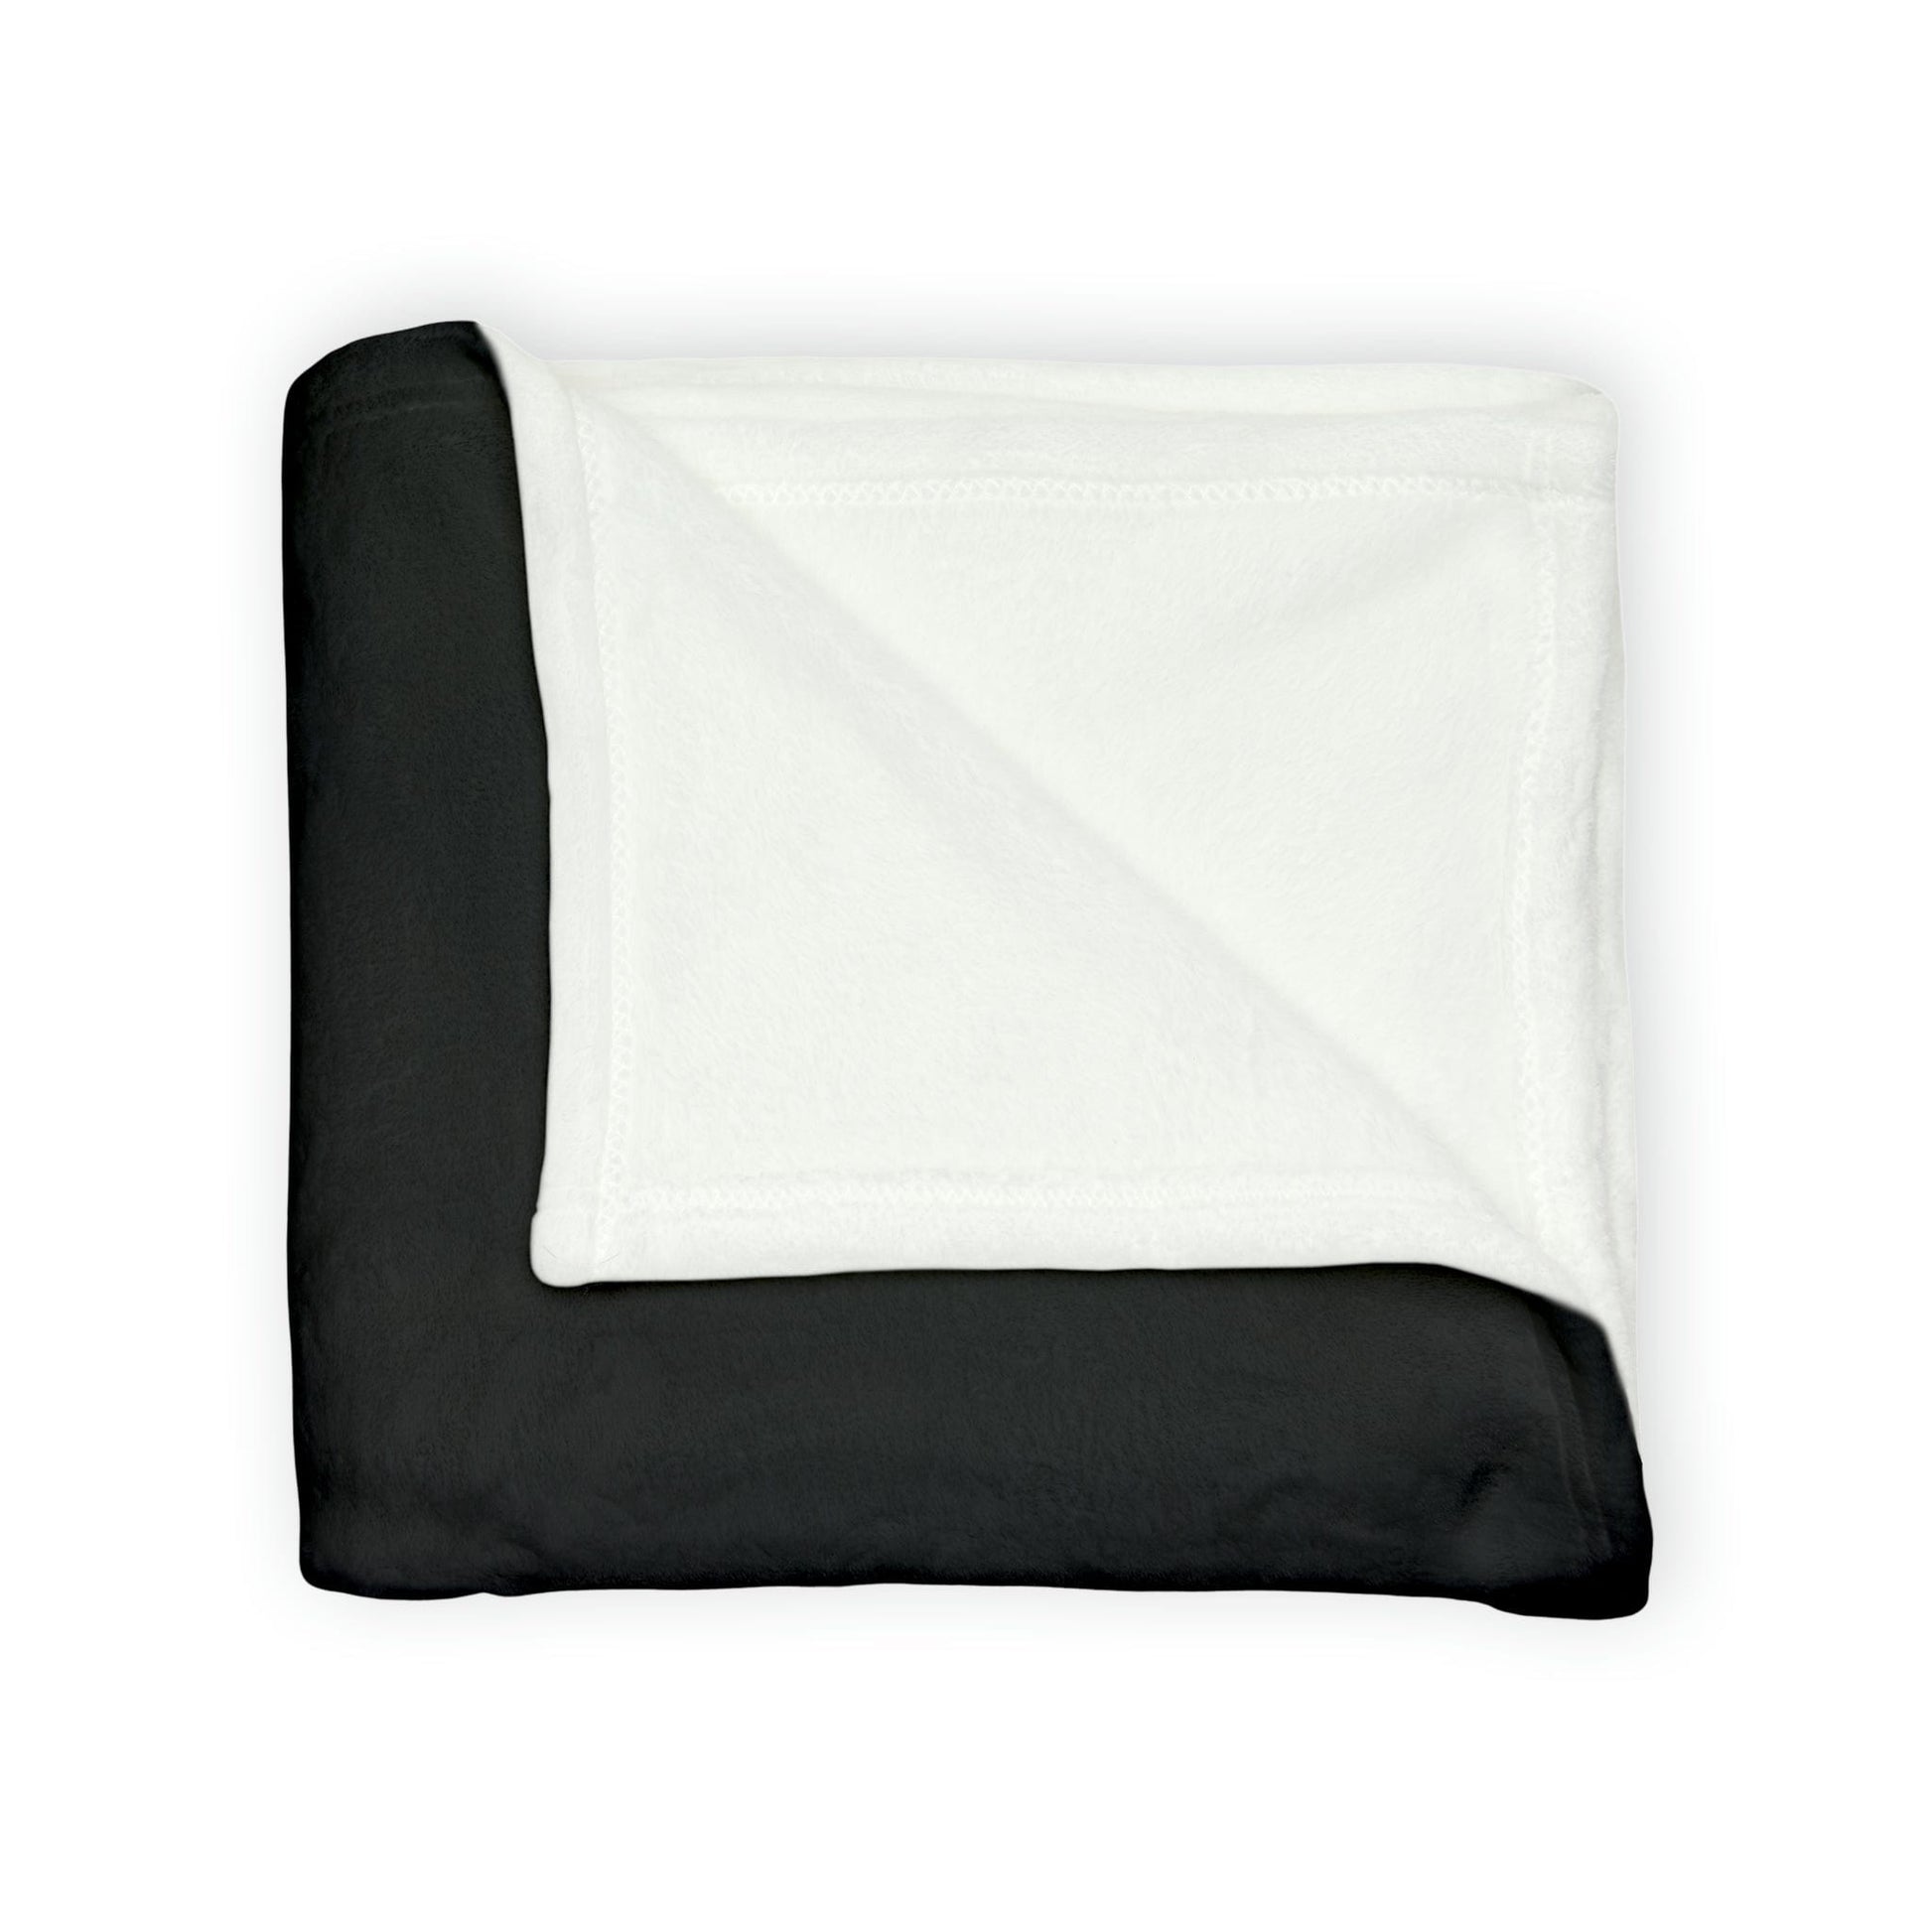 Fleece Blanket Royal Corps of Transport Fleece Blanket (Black Background)